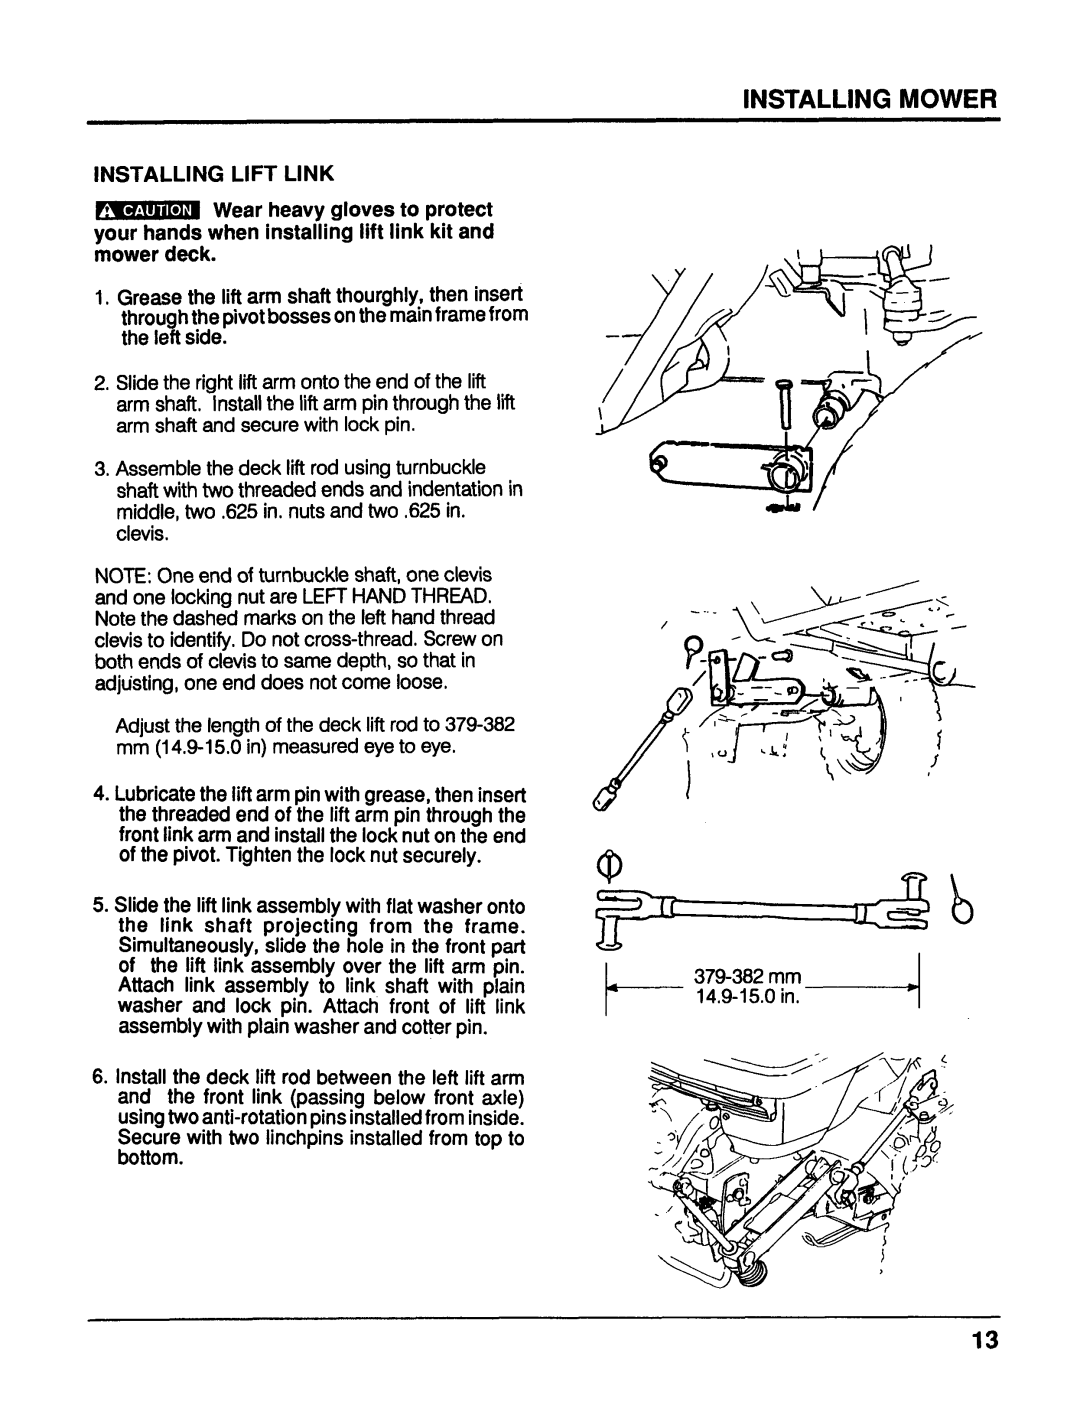 Honda Power Equipment MM52 manual Installing Mower, Installing Lift Link 